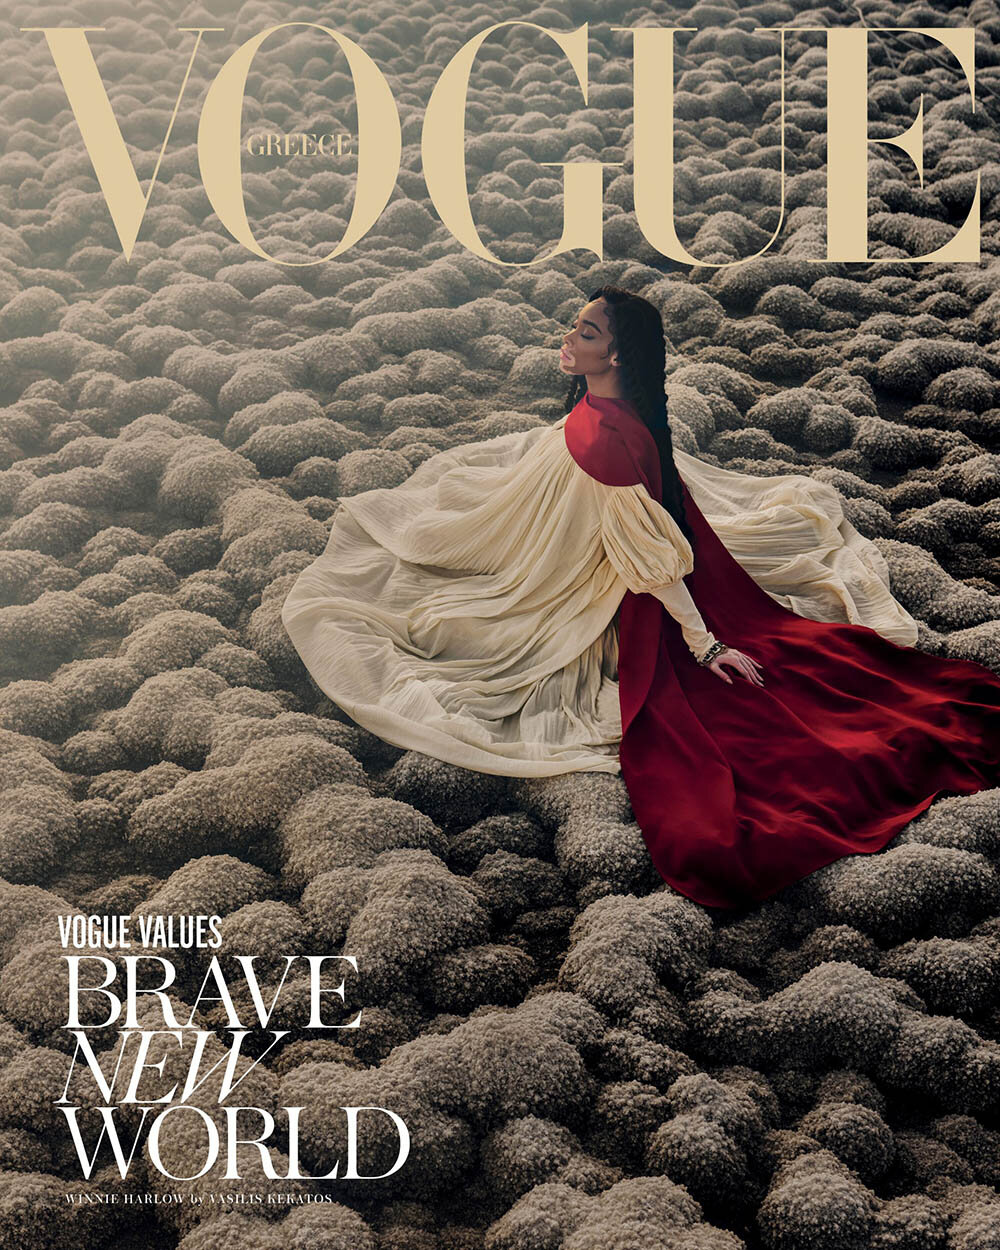 Winnie Harlow by Vasilis Kekatos for Vogue Greece February 2020 (3).jpg